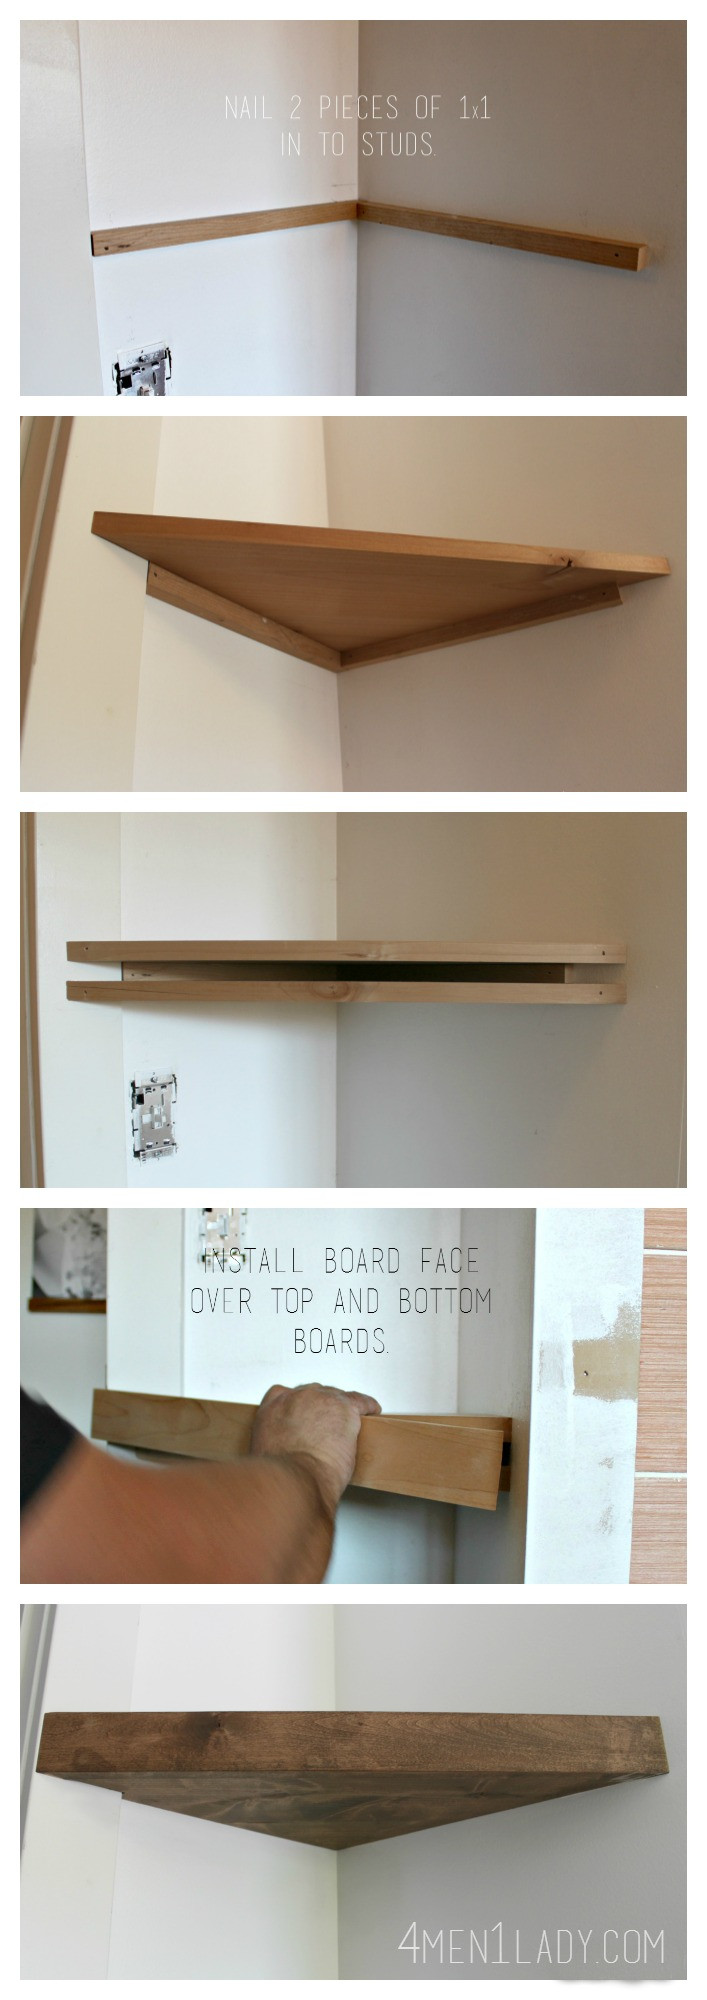 Best ideas about DIY Corner Shelves
. Save or Pin When Life Gives You Lemons…Make Corner Floating Shelves Now.